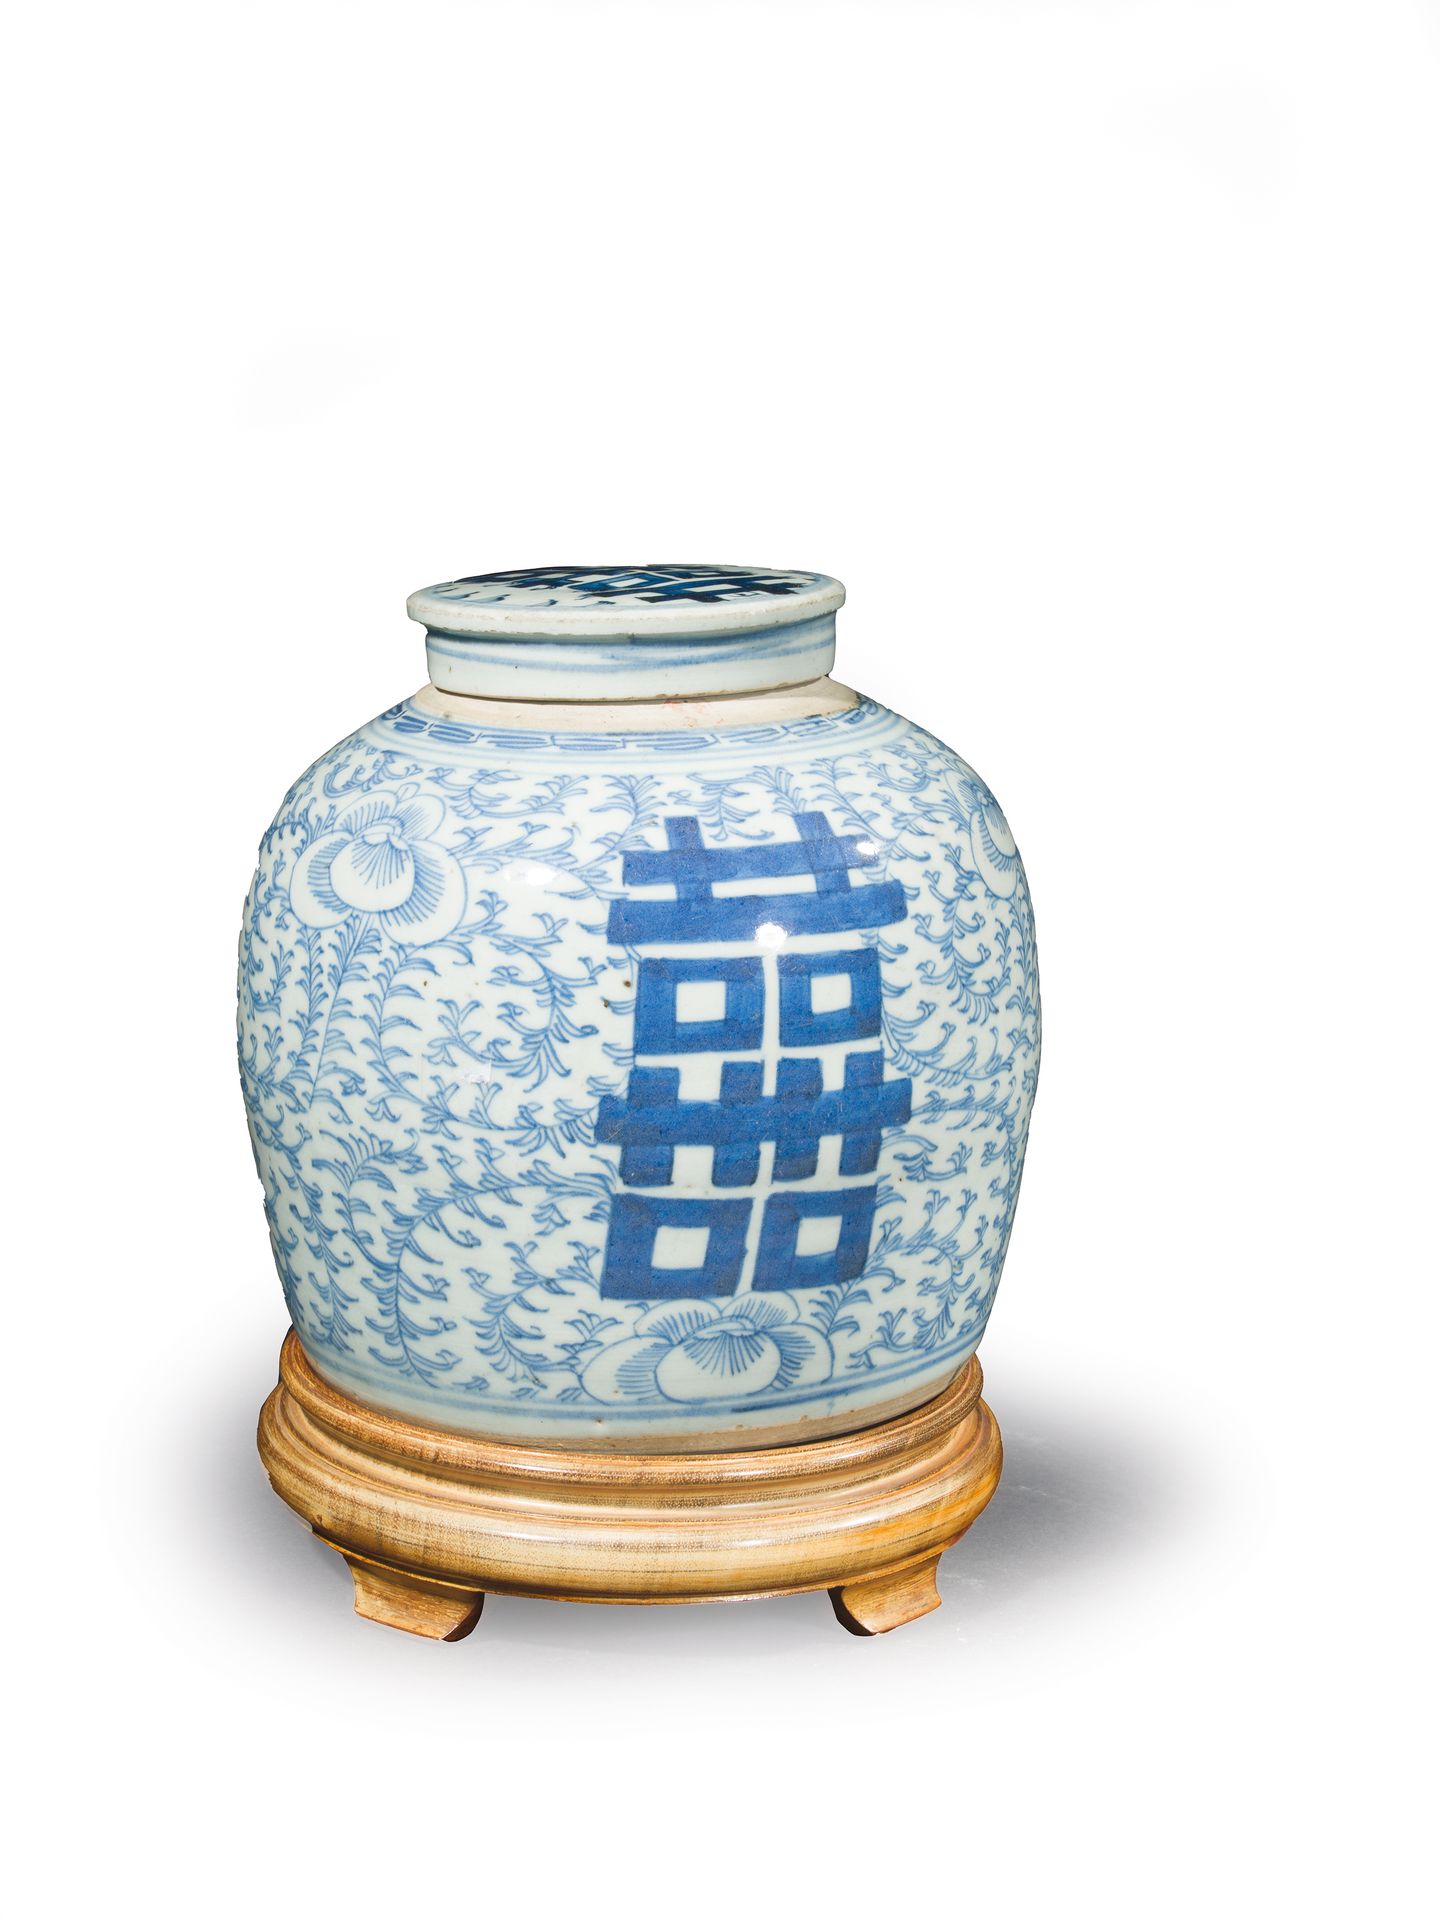 Null 
青花瓷姜罐。

中国 20世纪

H.26厘米